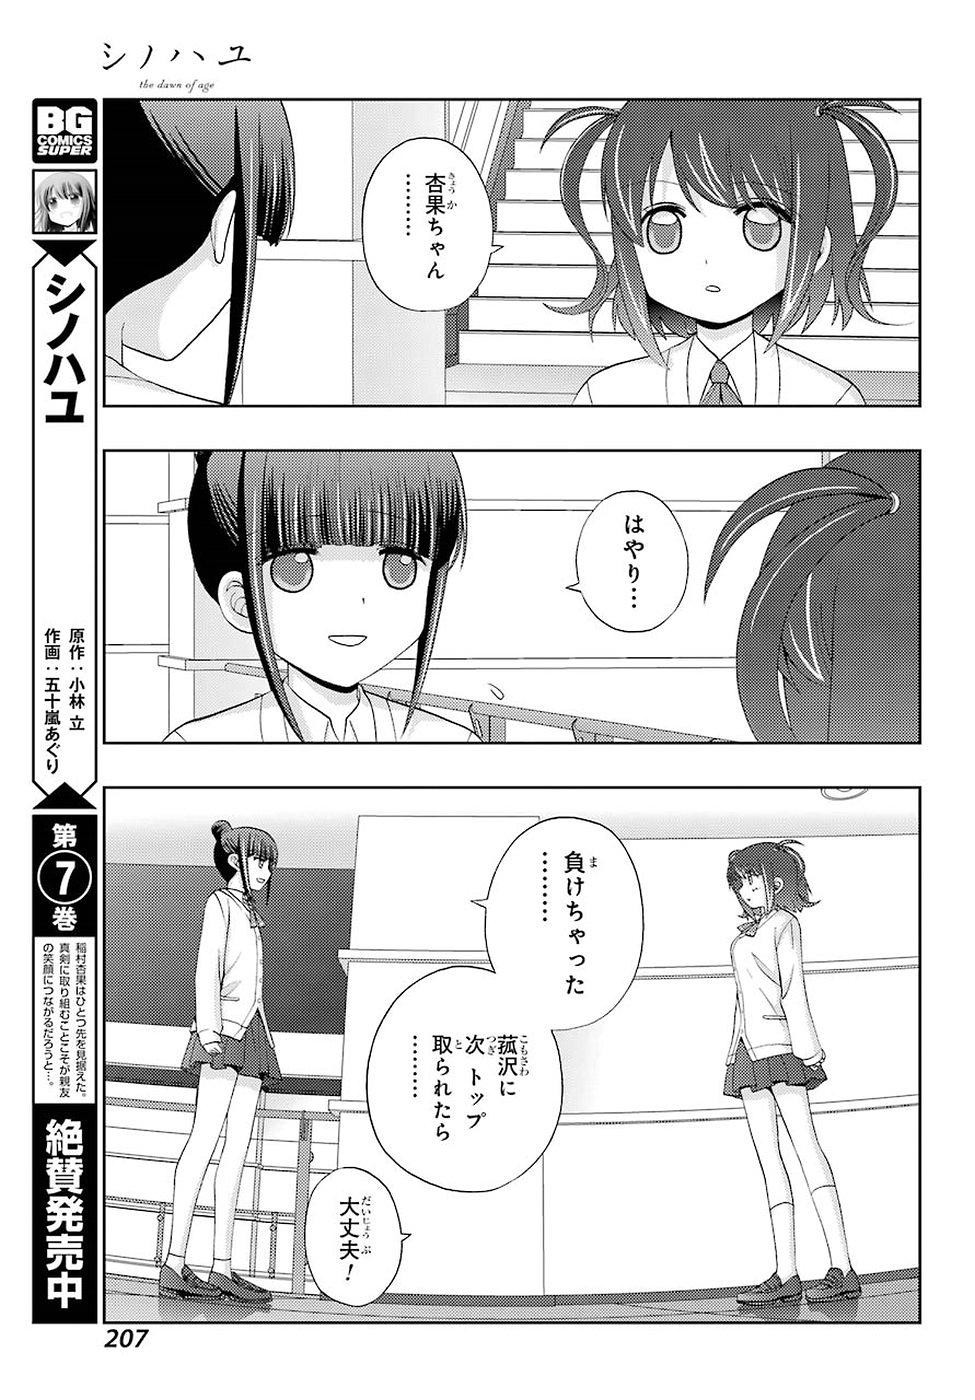 Shinohayu - The Dawn of Age Manga - Chapter 049 - Page 5